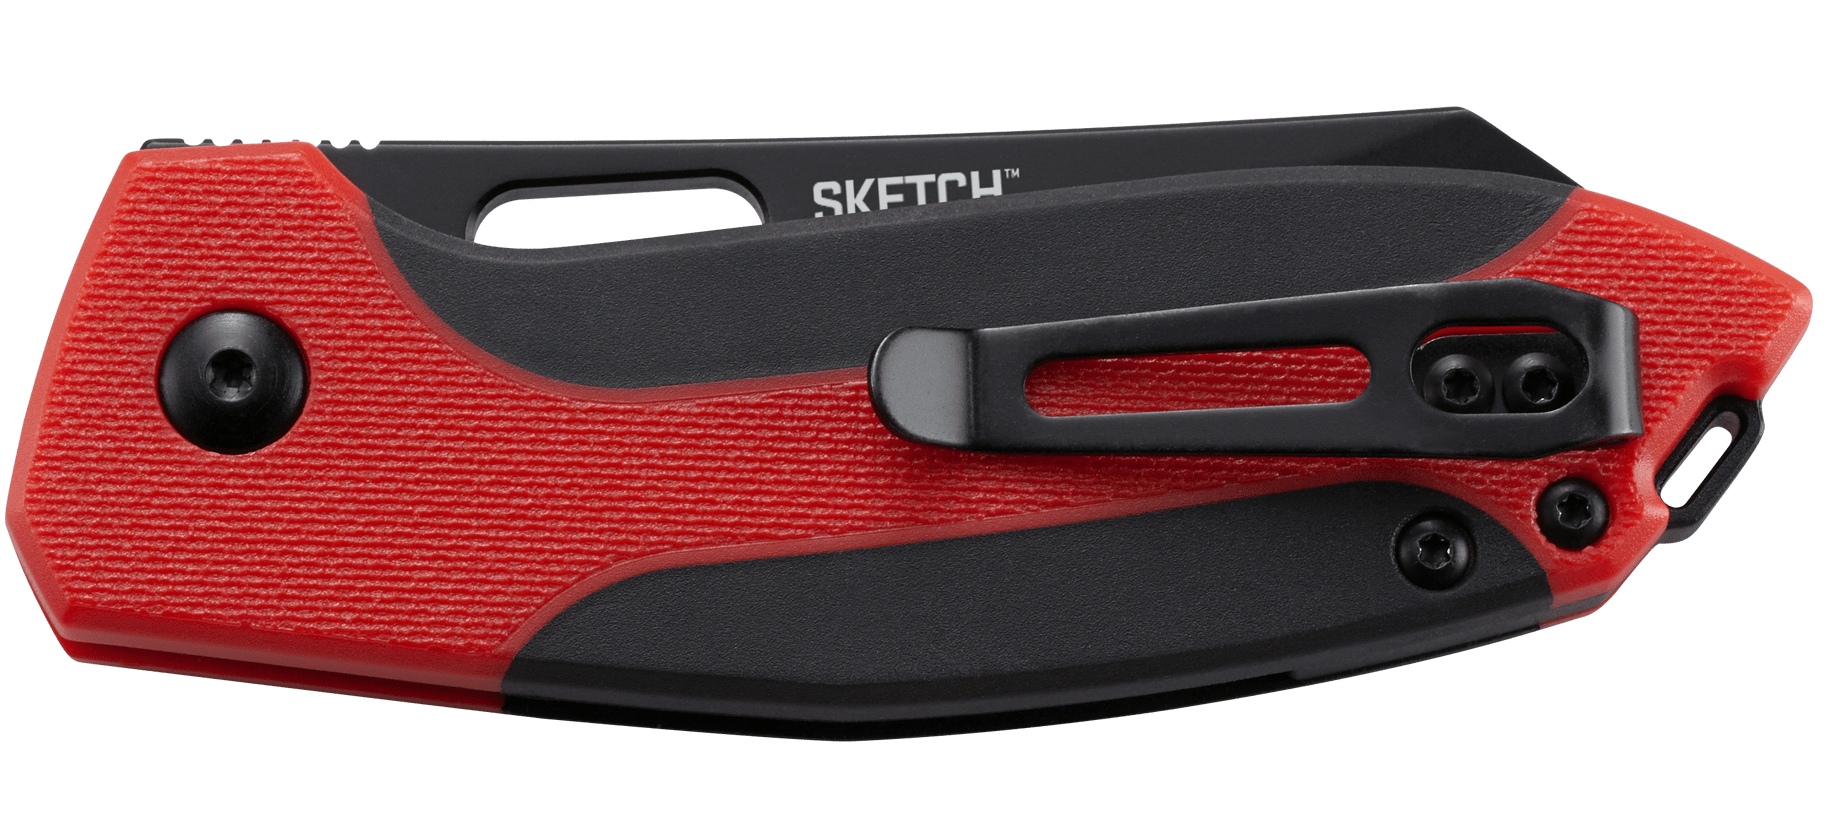 фото Складной нож crkt sketch™ red, сталь 8cr13mov, рукоять abs пластик